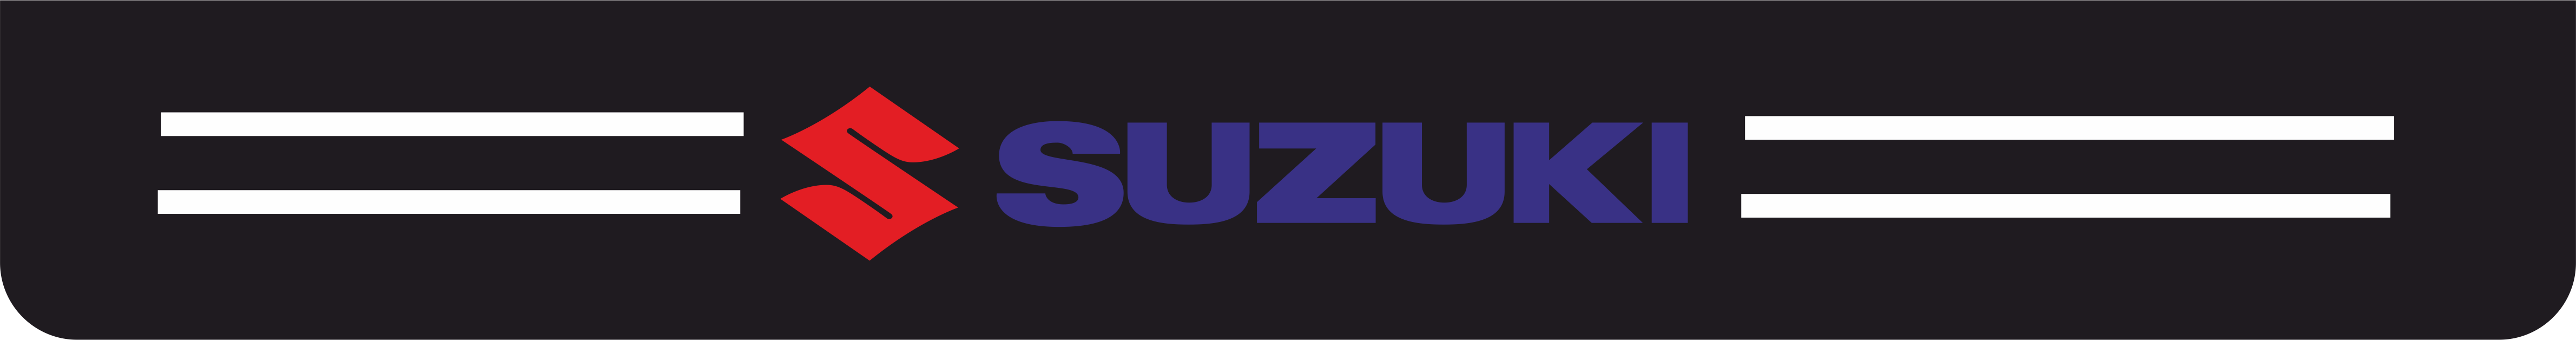 suzuki - Suzuki kapı eşiği sticker